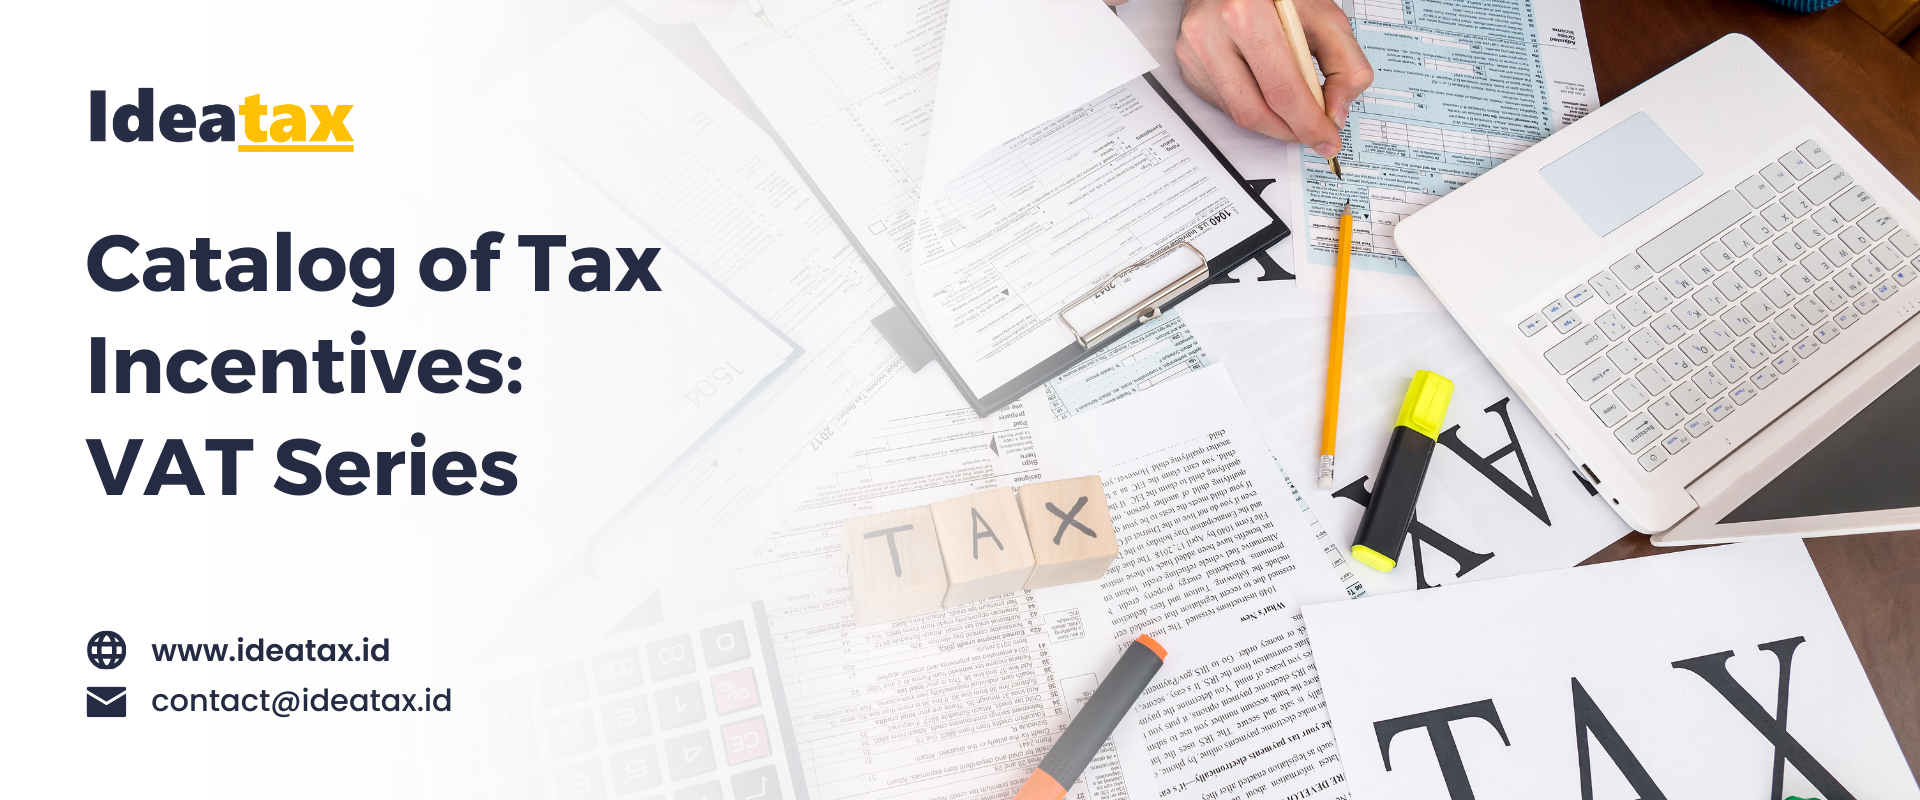 Catalog of Tax Incentives: VAT Series